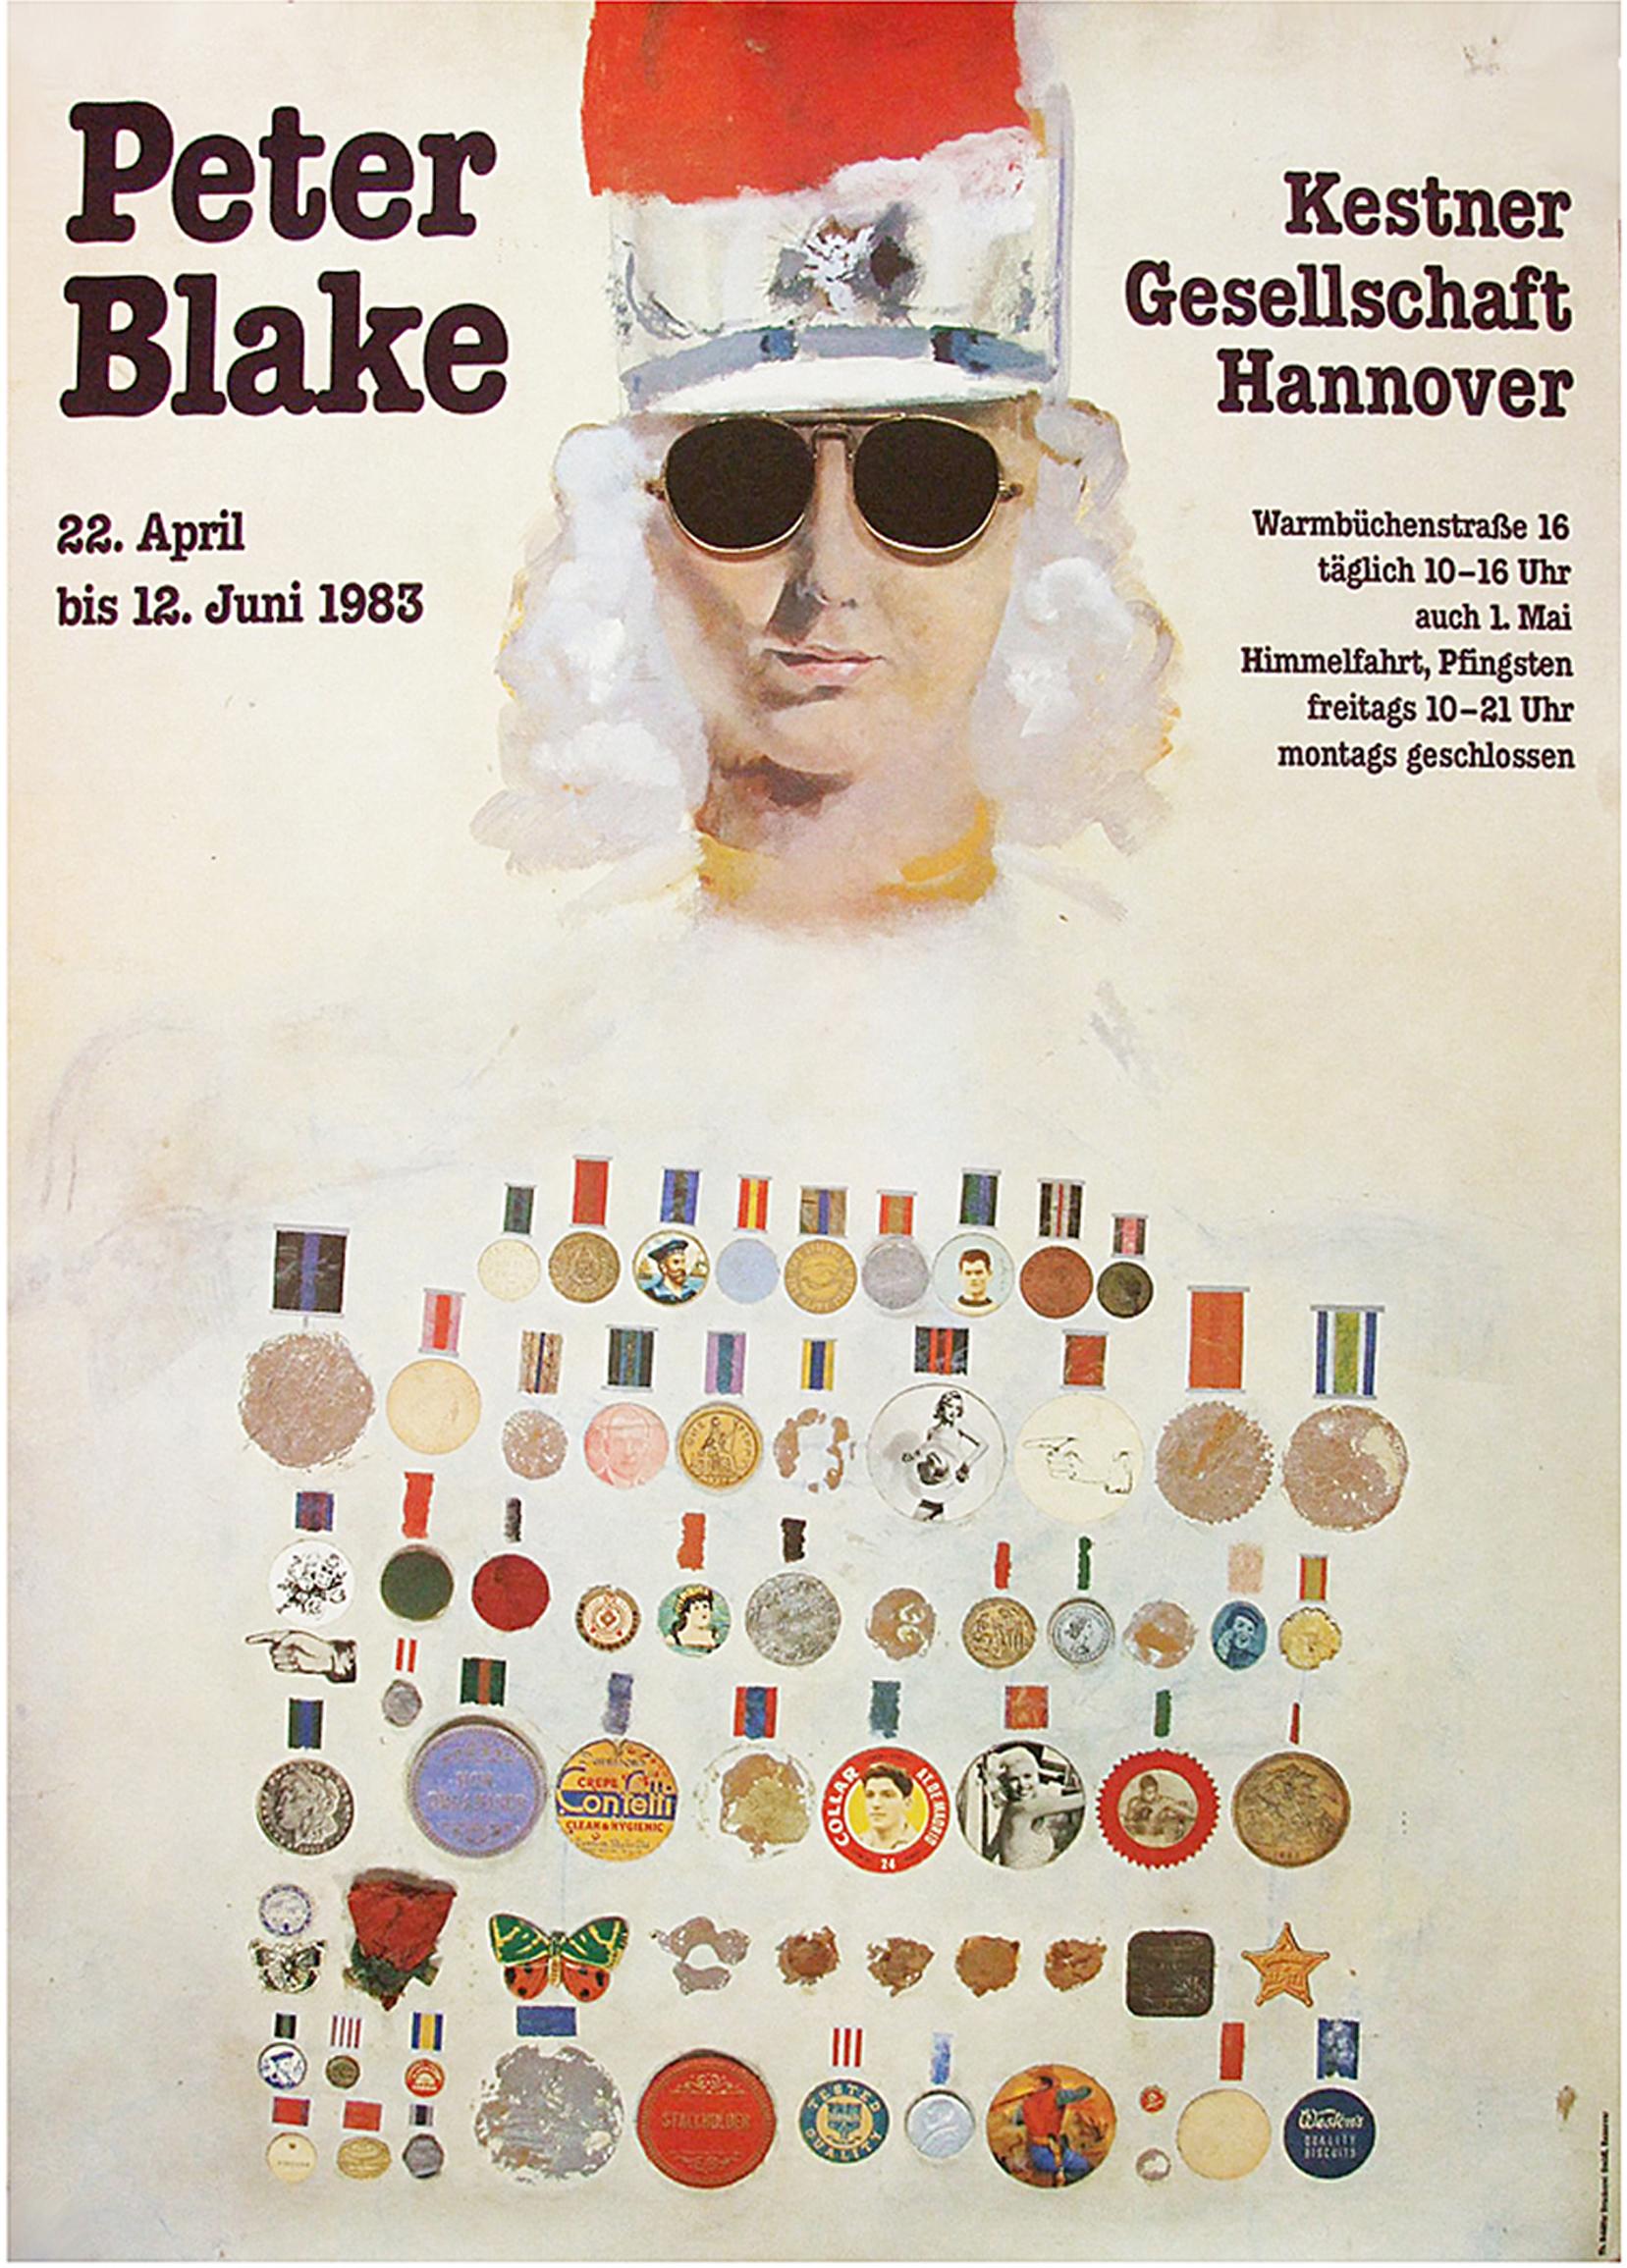 Original 1983 exhibition poster for Peter Blake at the Kestner Gesellschaft, Hannover.

First edition color offset lithograph.

Rolled.

Measures: H 84cm x W 59.5cm.